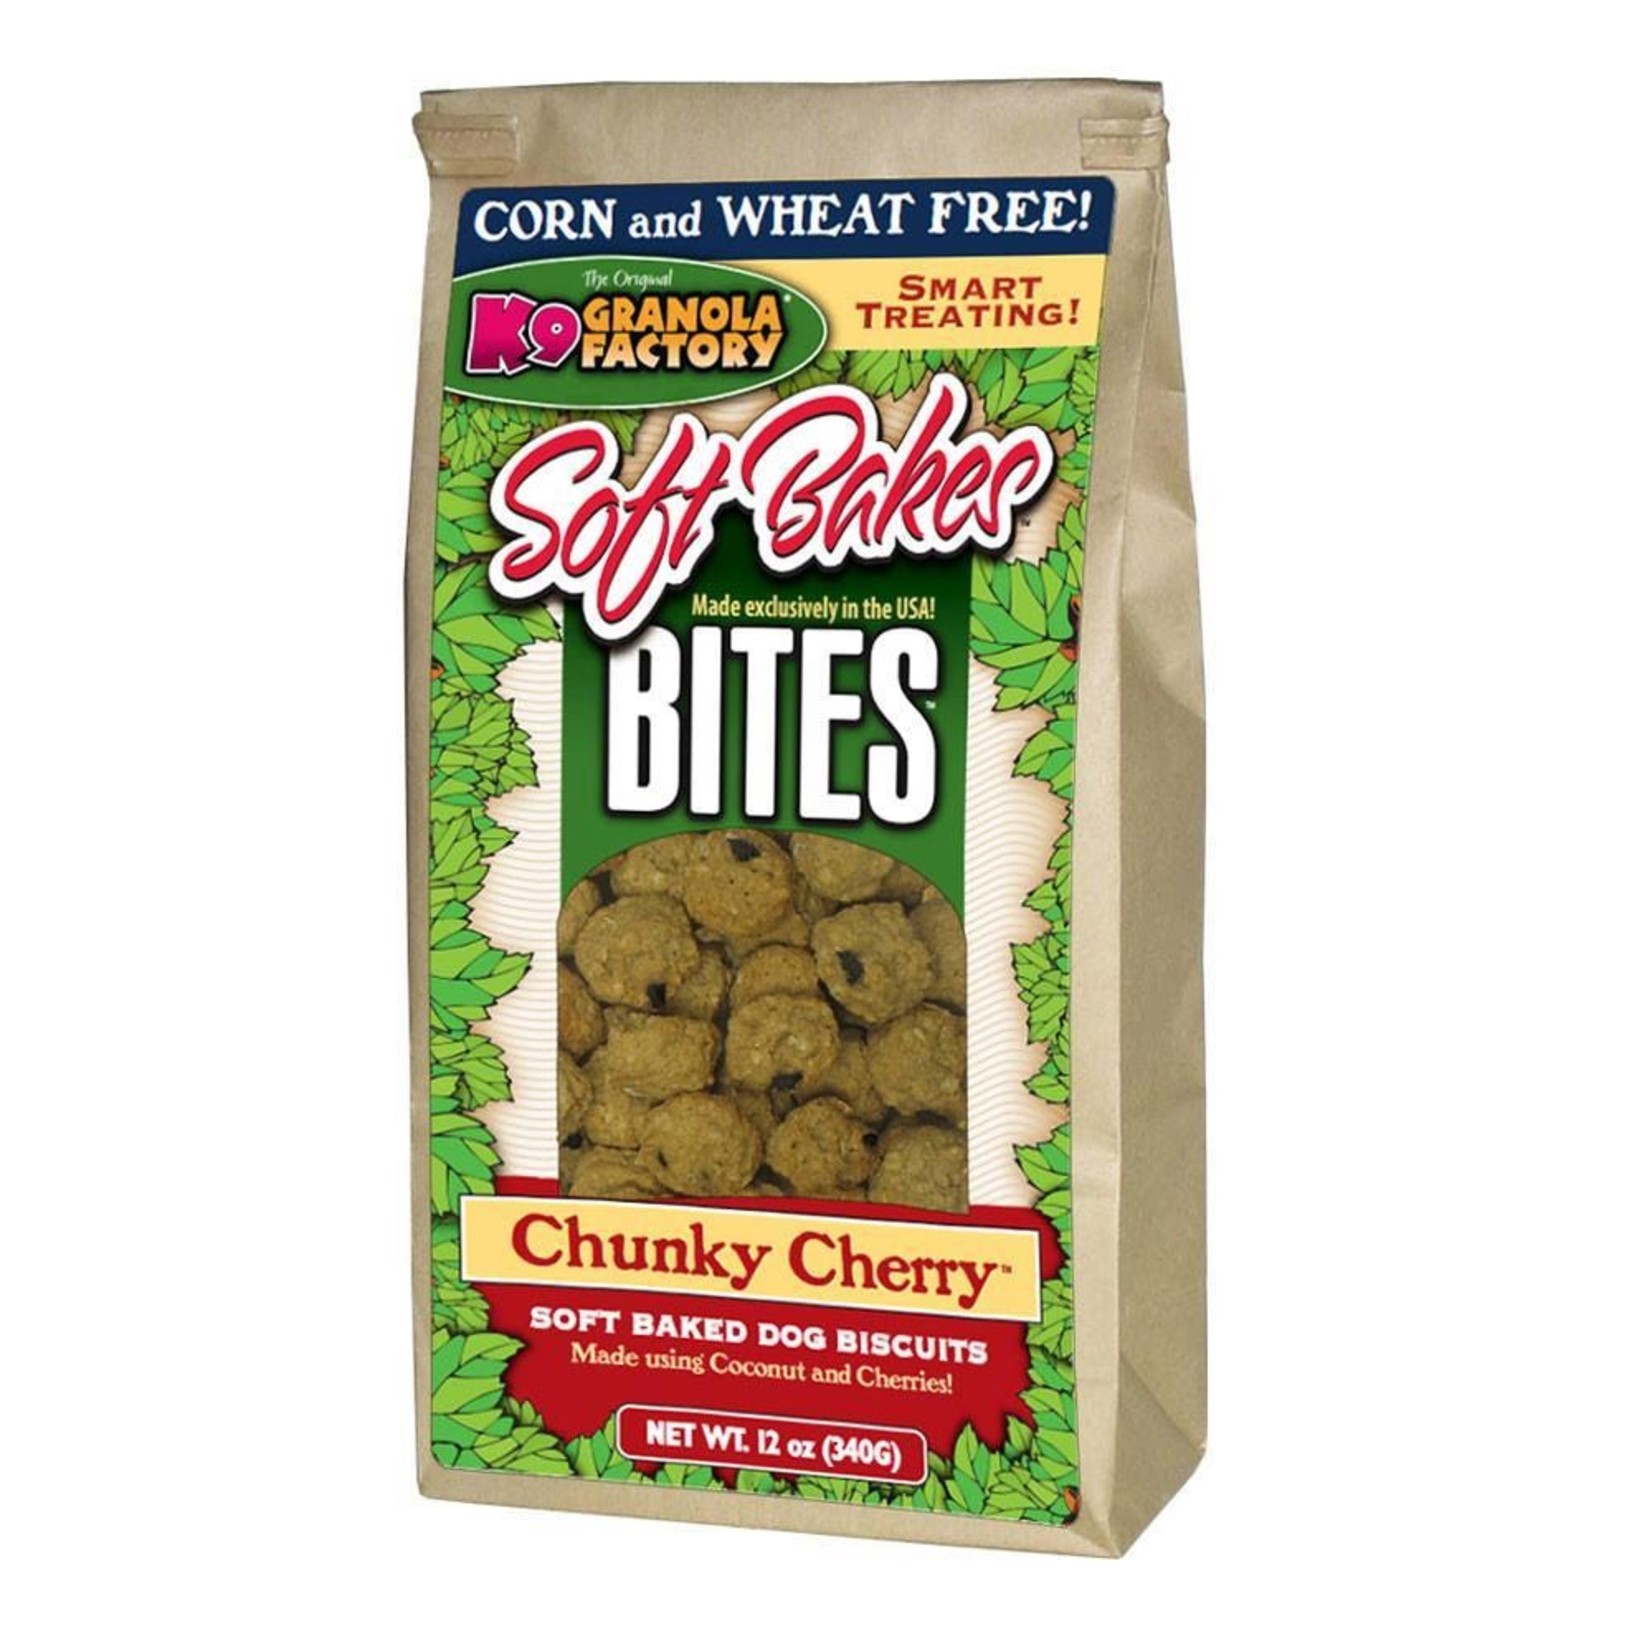 K9 Granola Factory K9 Granola Soft Bakes Bites Chunky Cherry Dog Biscuit Treats 10oz